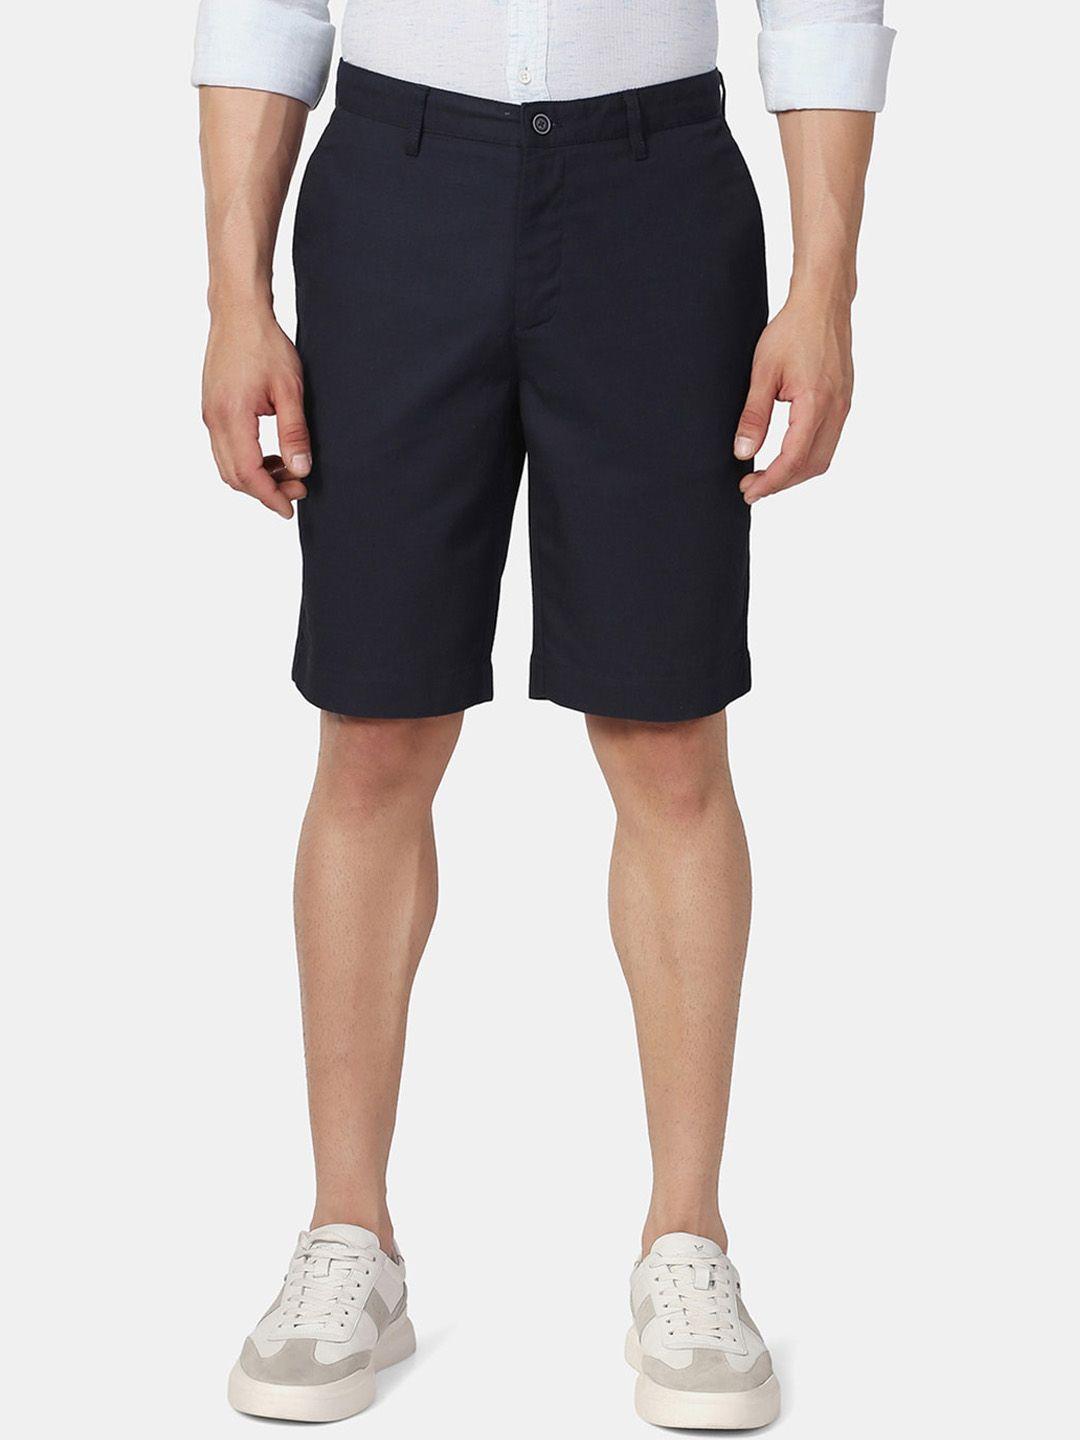 blackberrys men mid-rise slim fit shorts